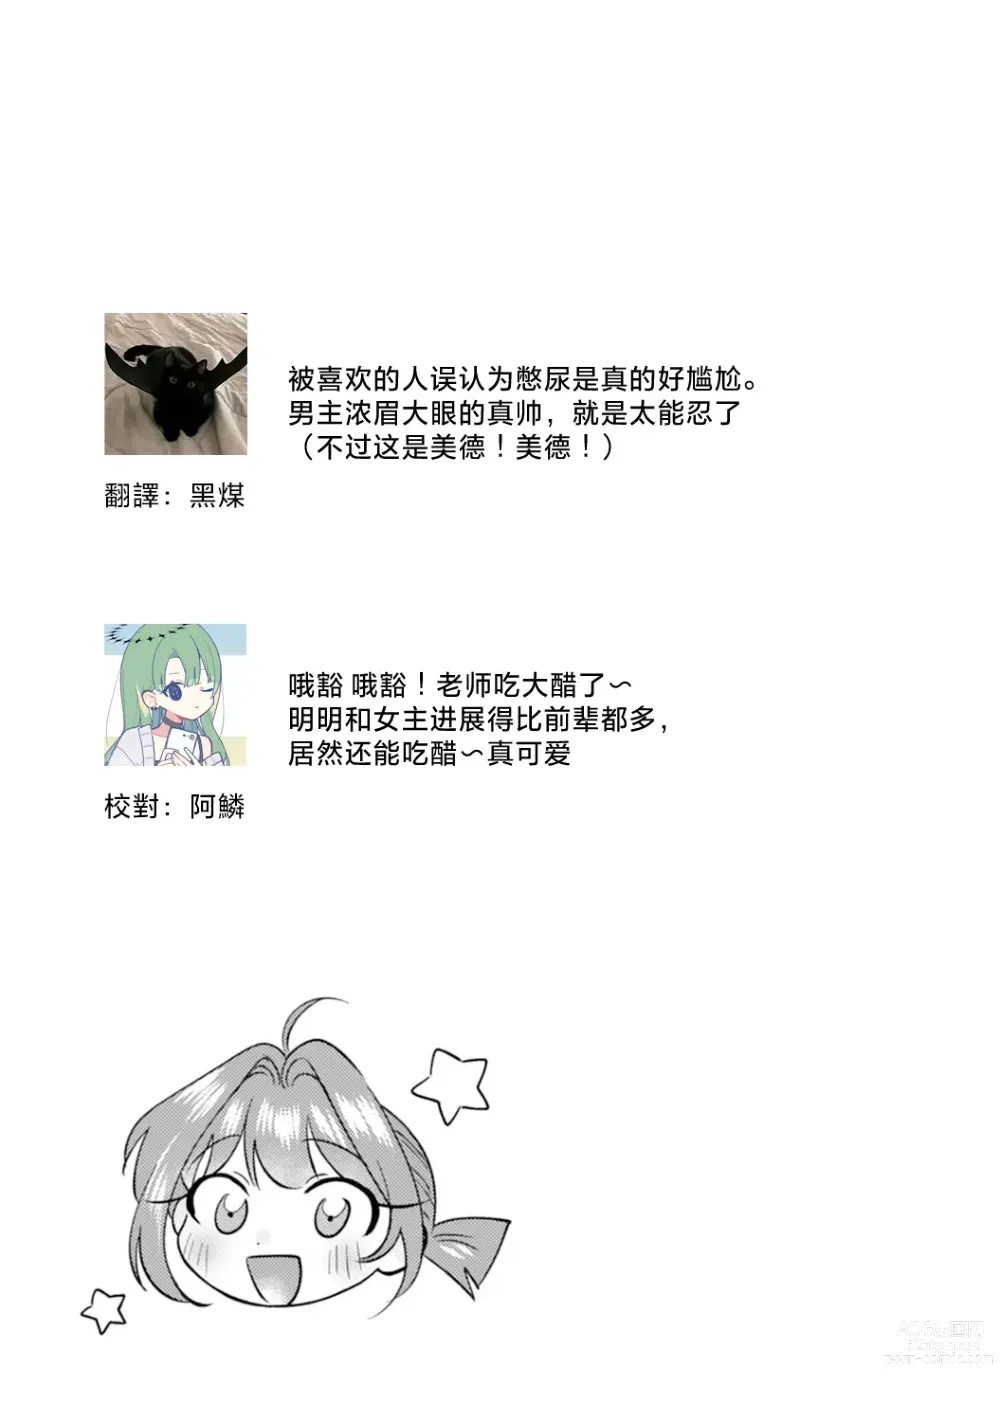 Page 67 of manga 浅叶老师专一的纯爱 1-2